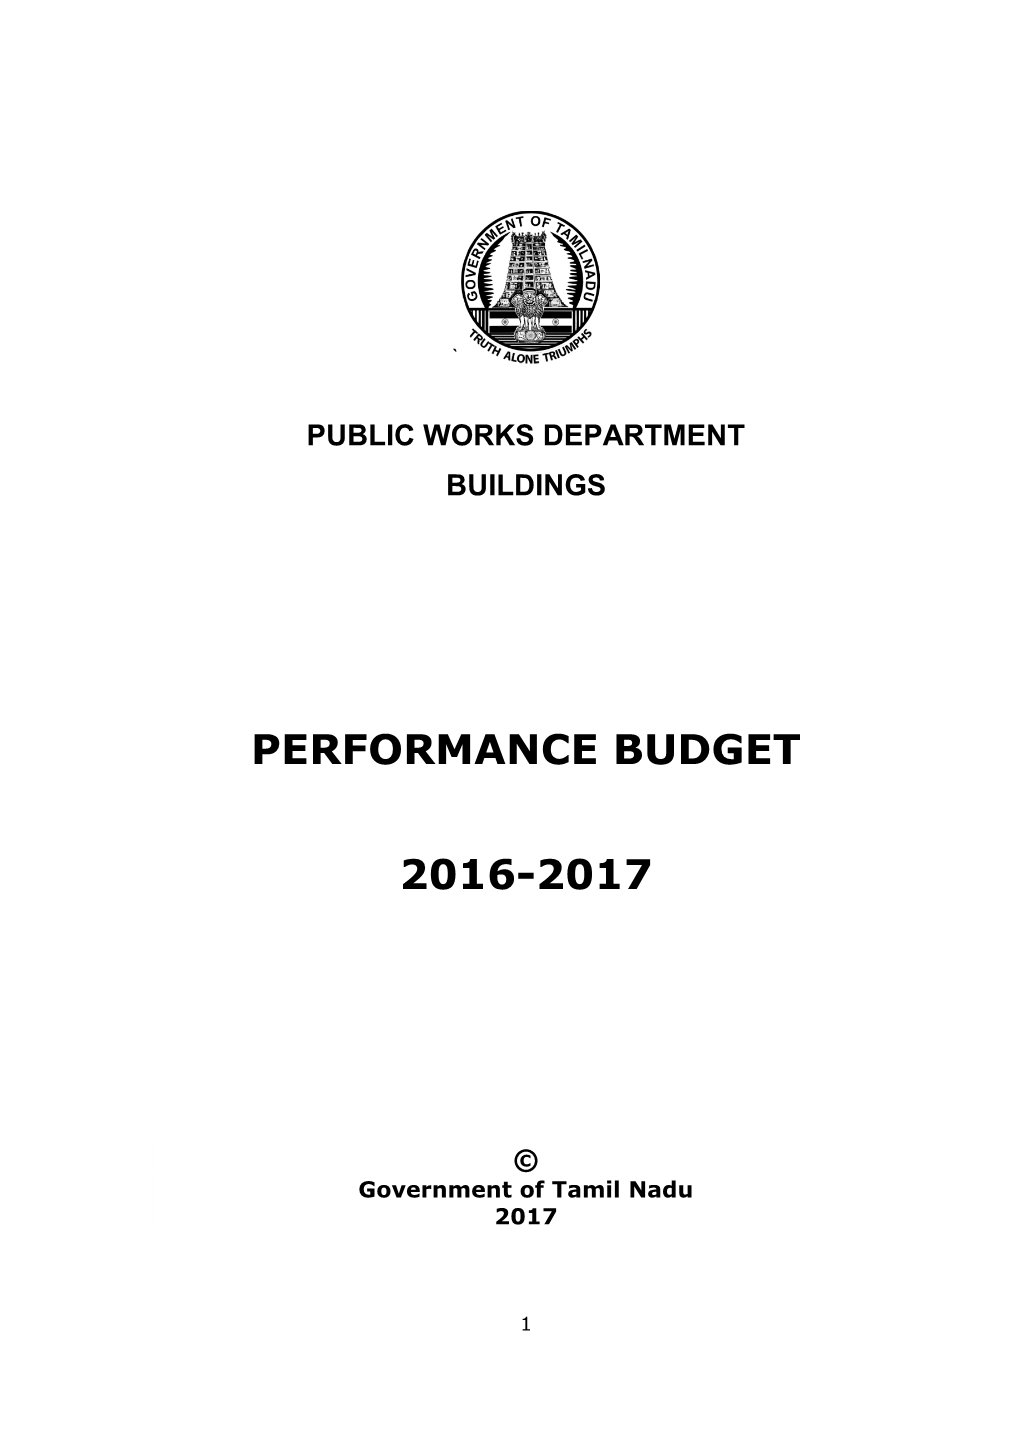 Performance Budget 2016-2017